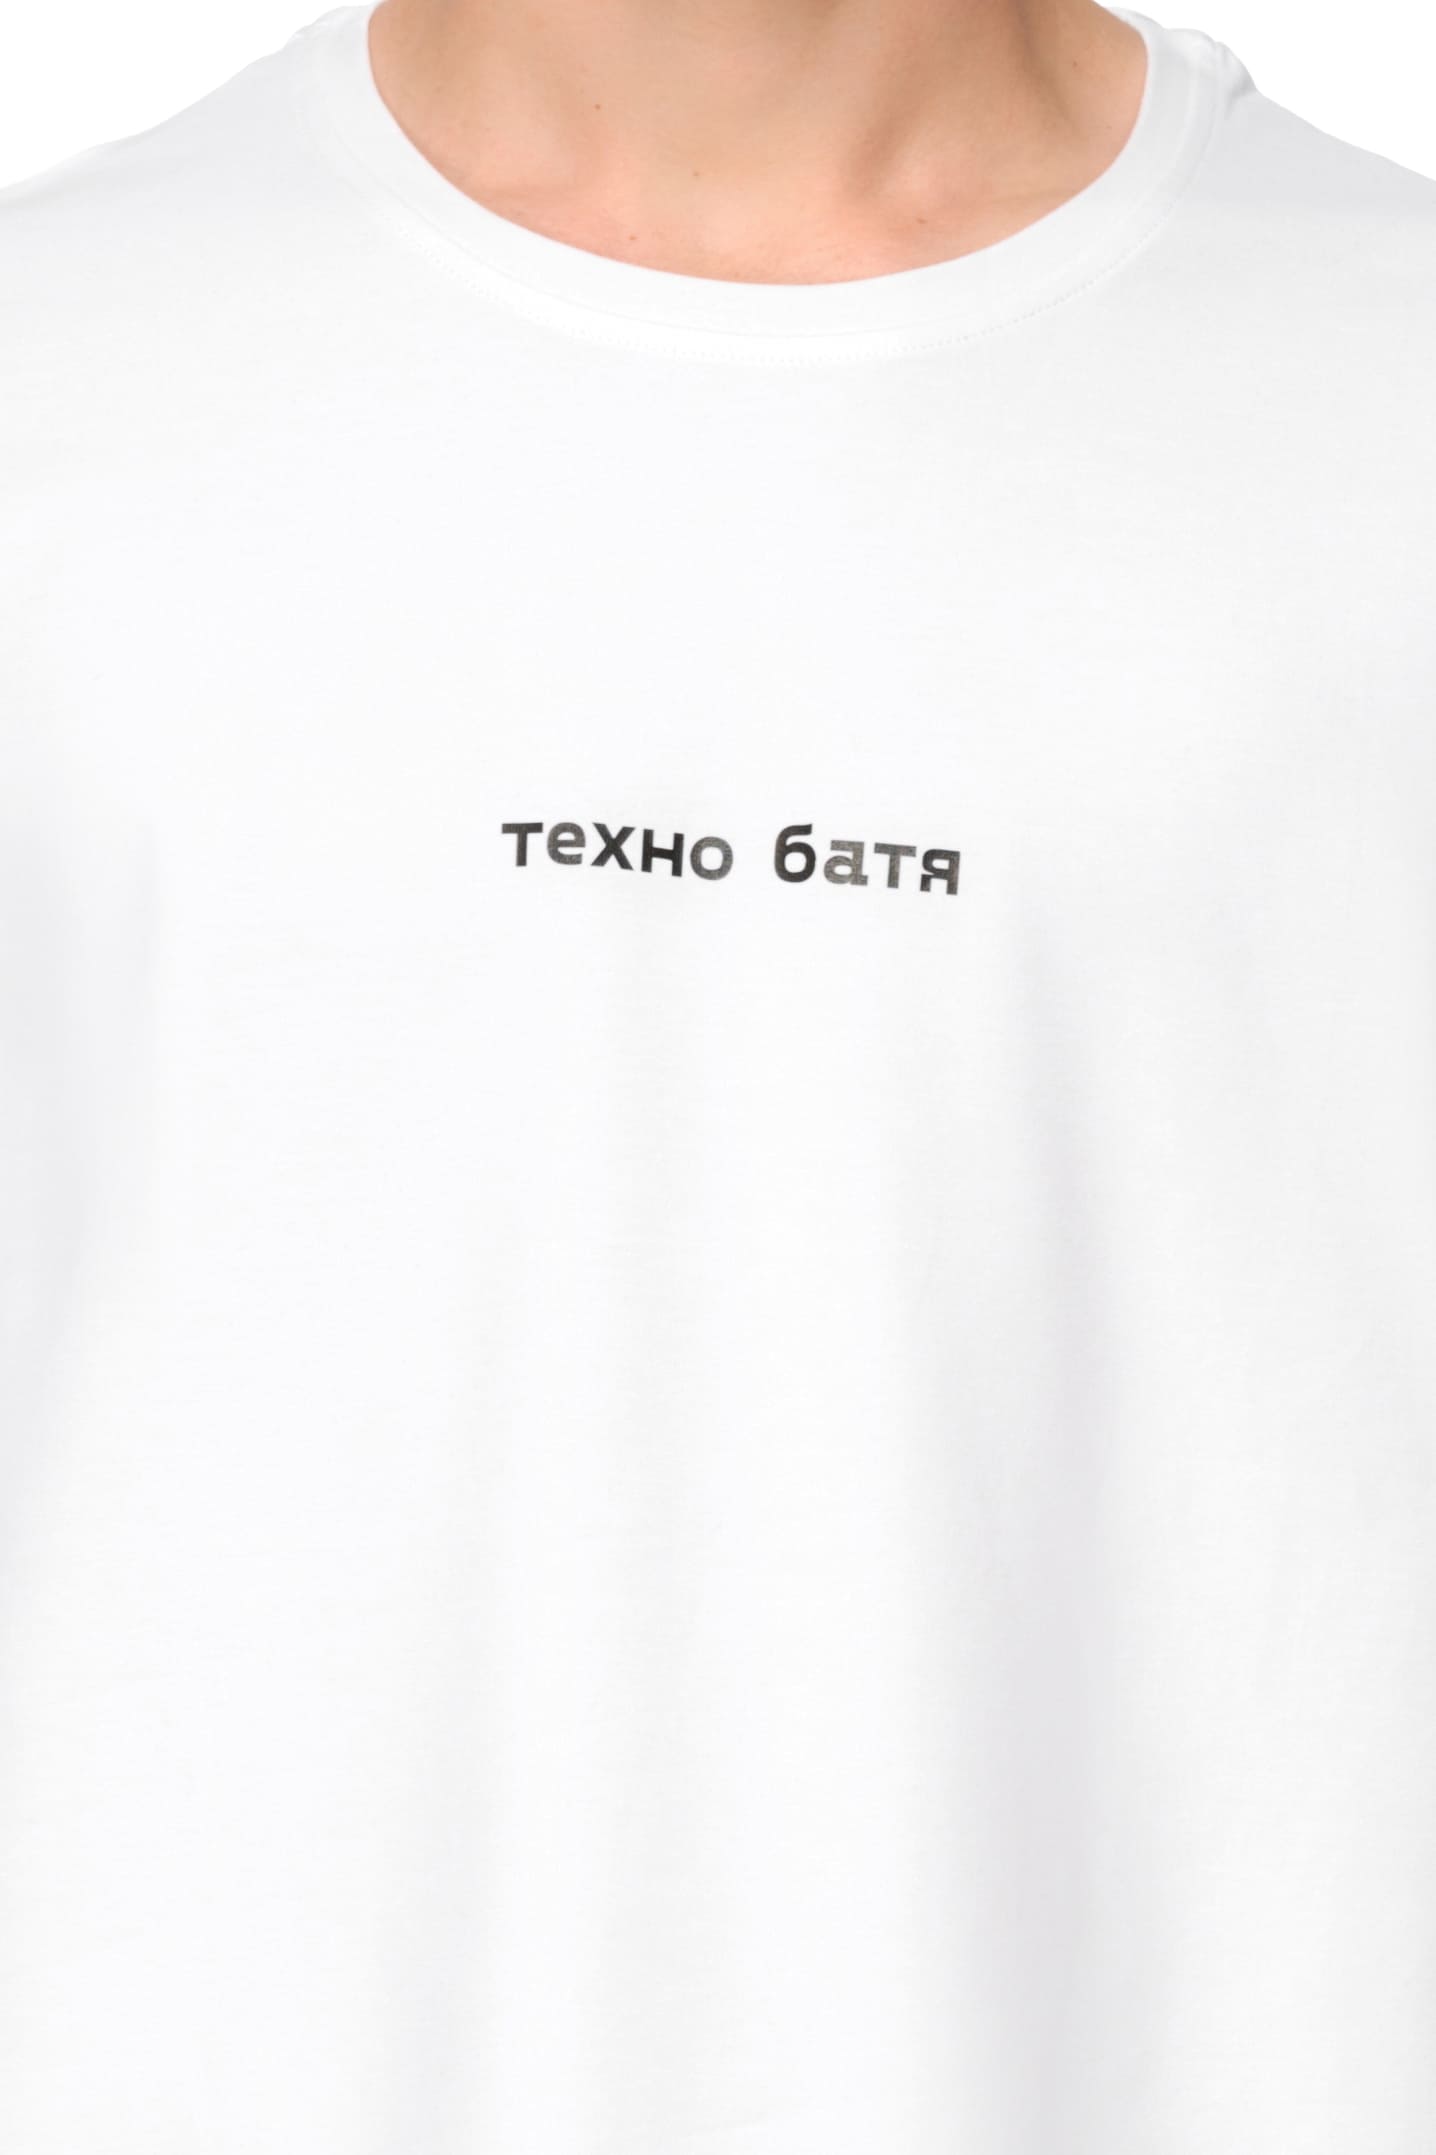 Techno Daddy T-Shirt